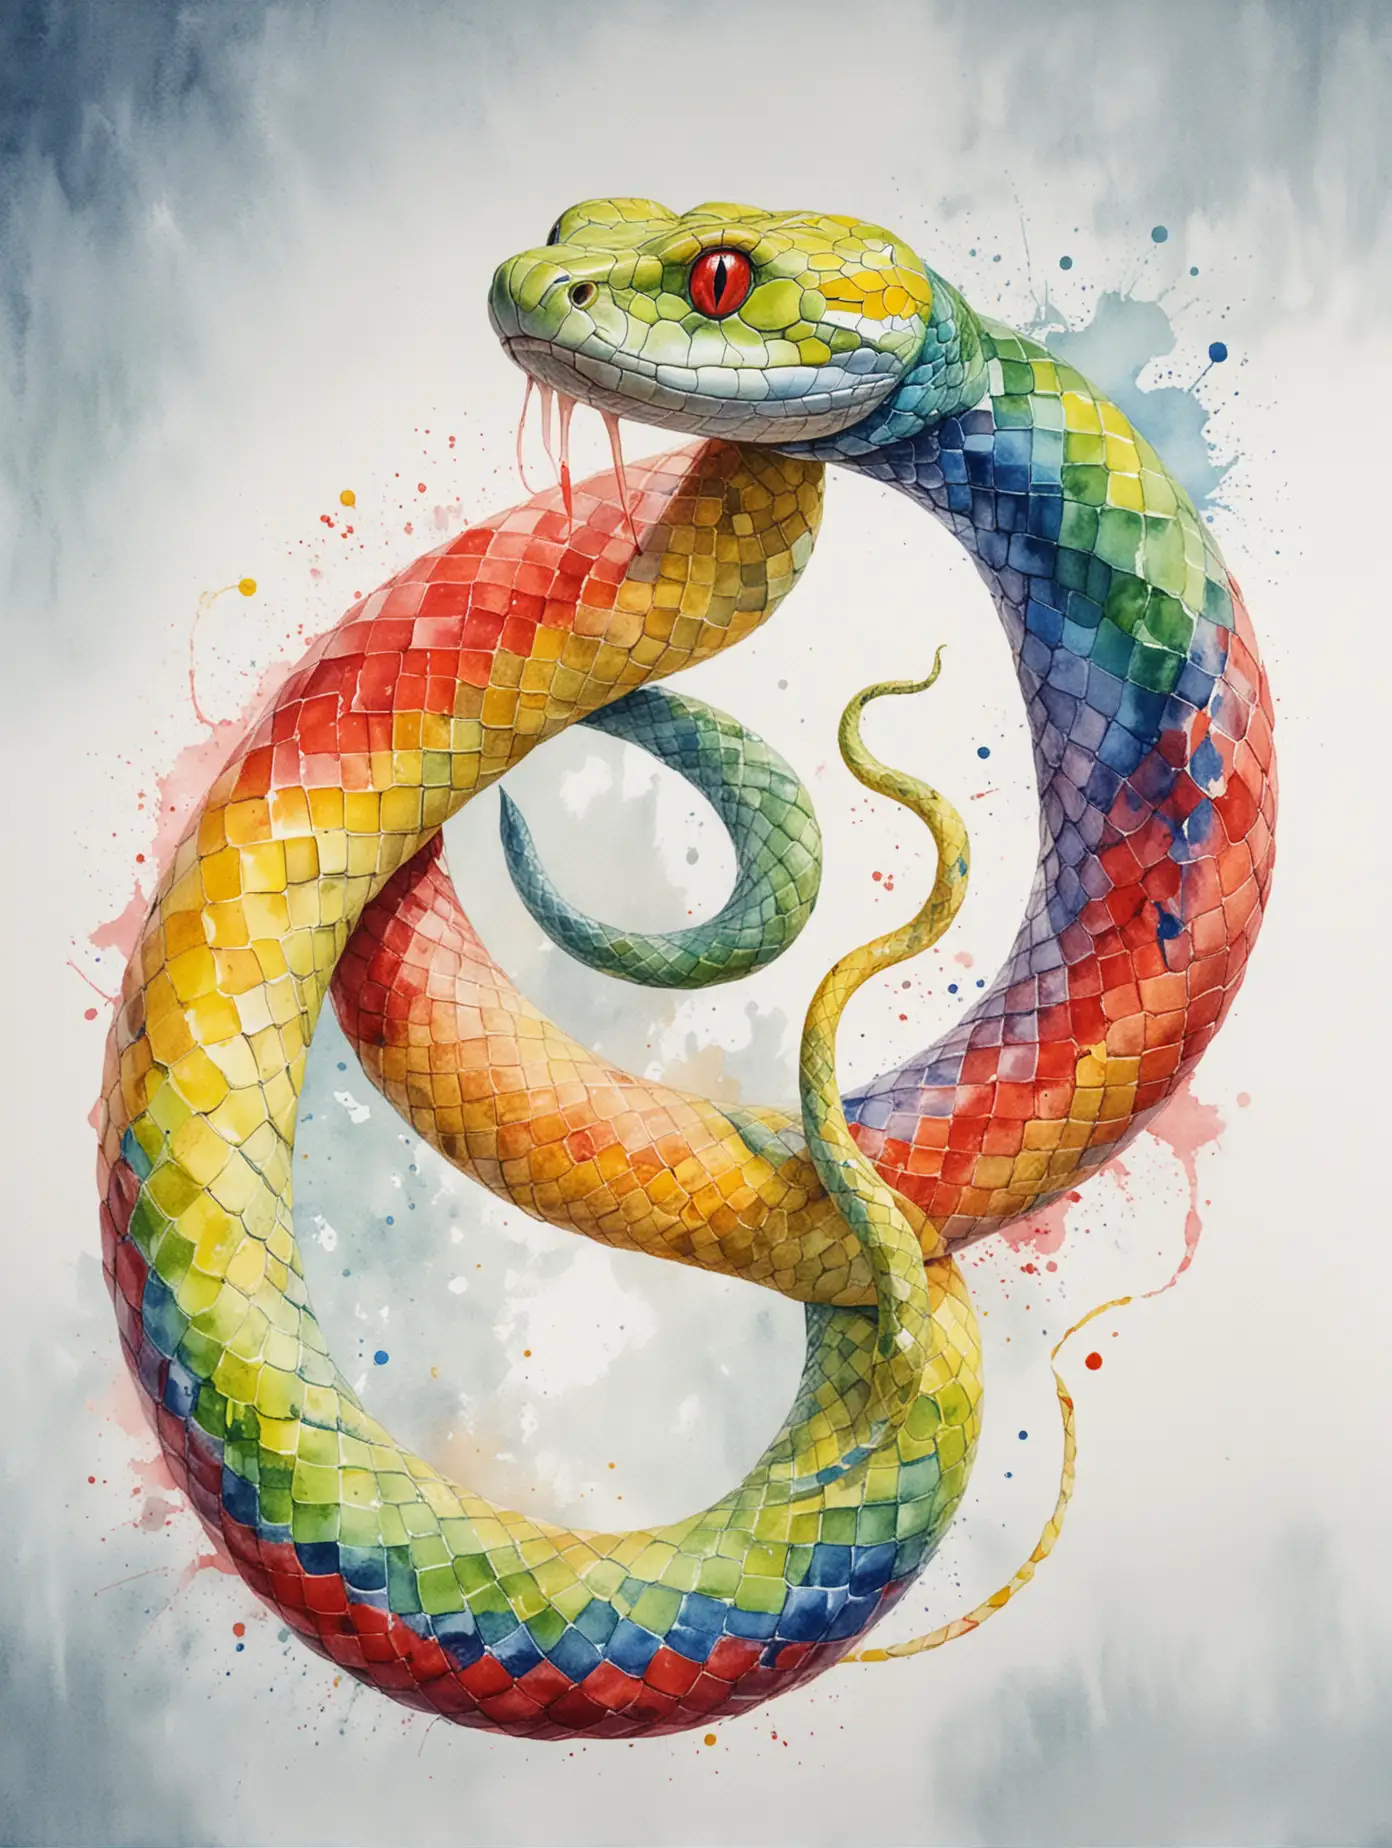 Vibrant Watercolor Illustration of a Serpentine Creature